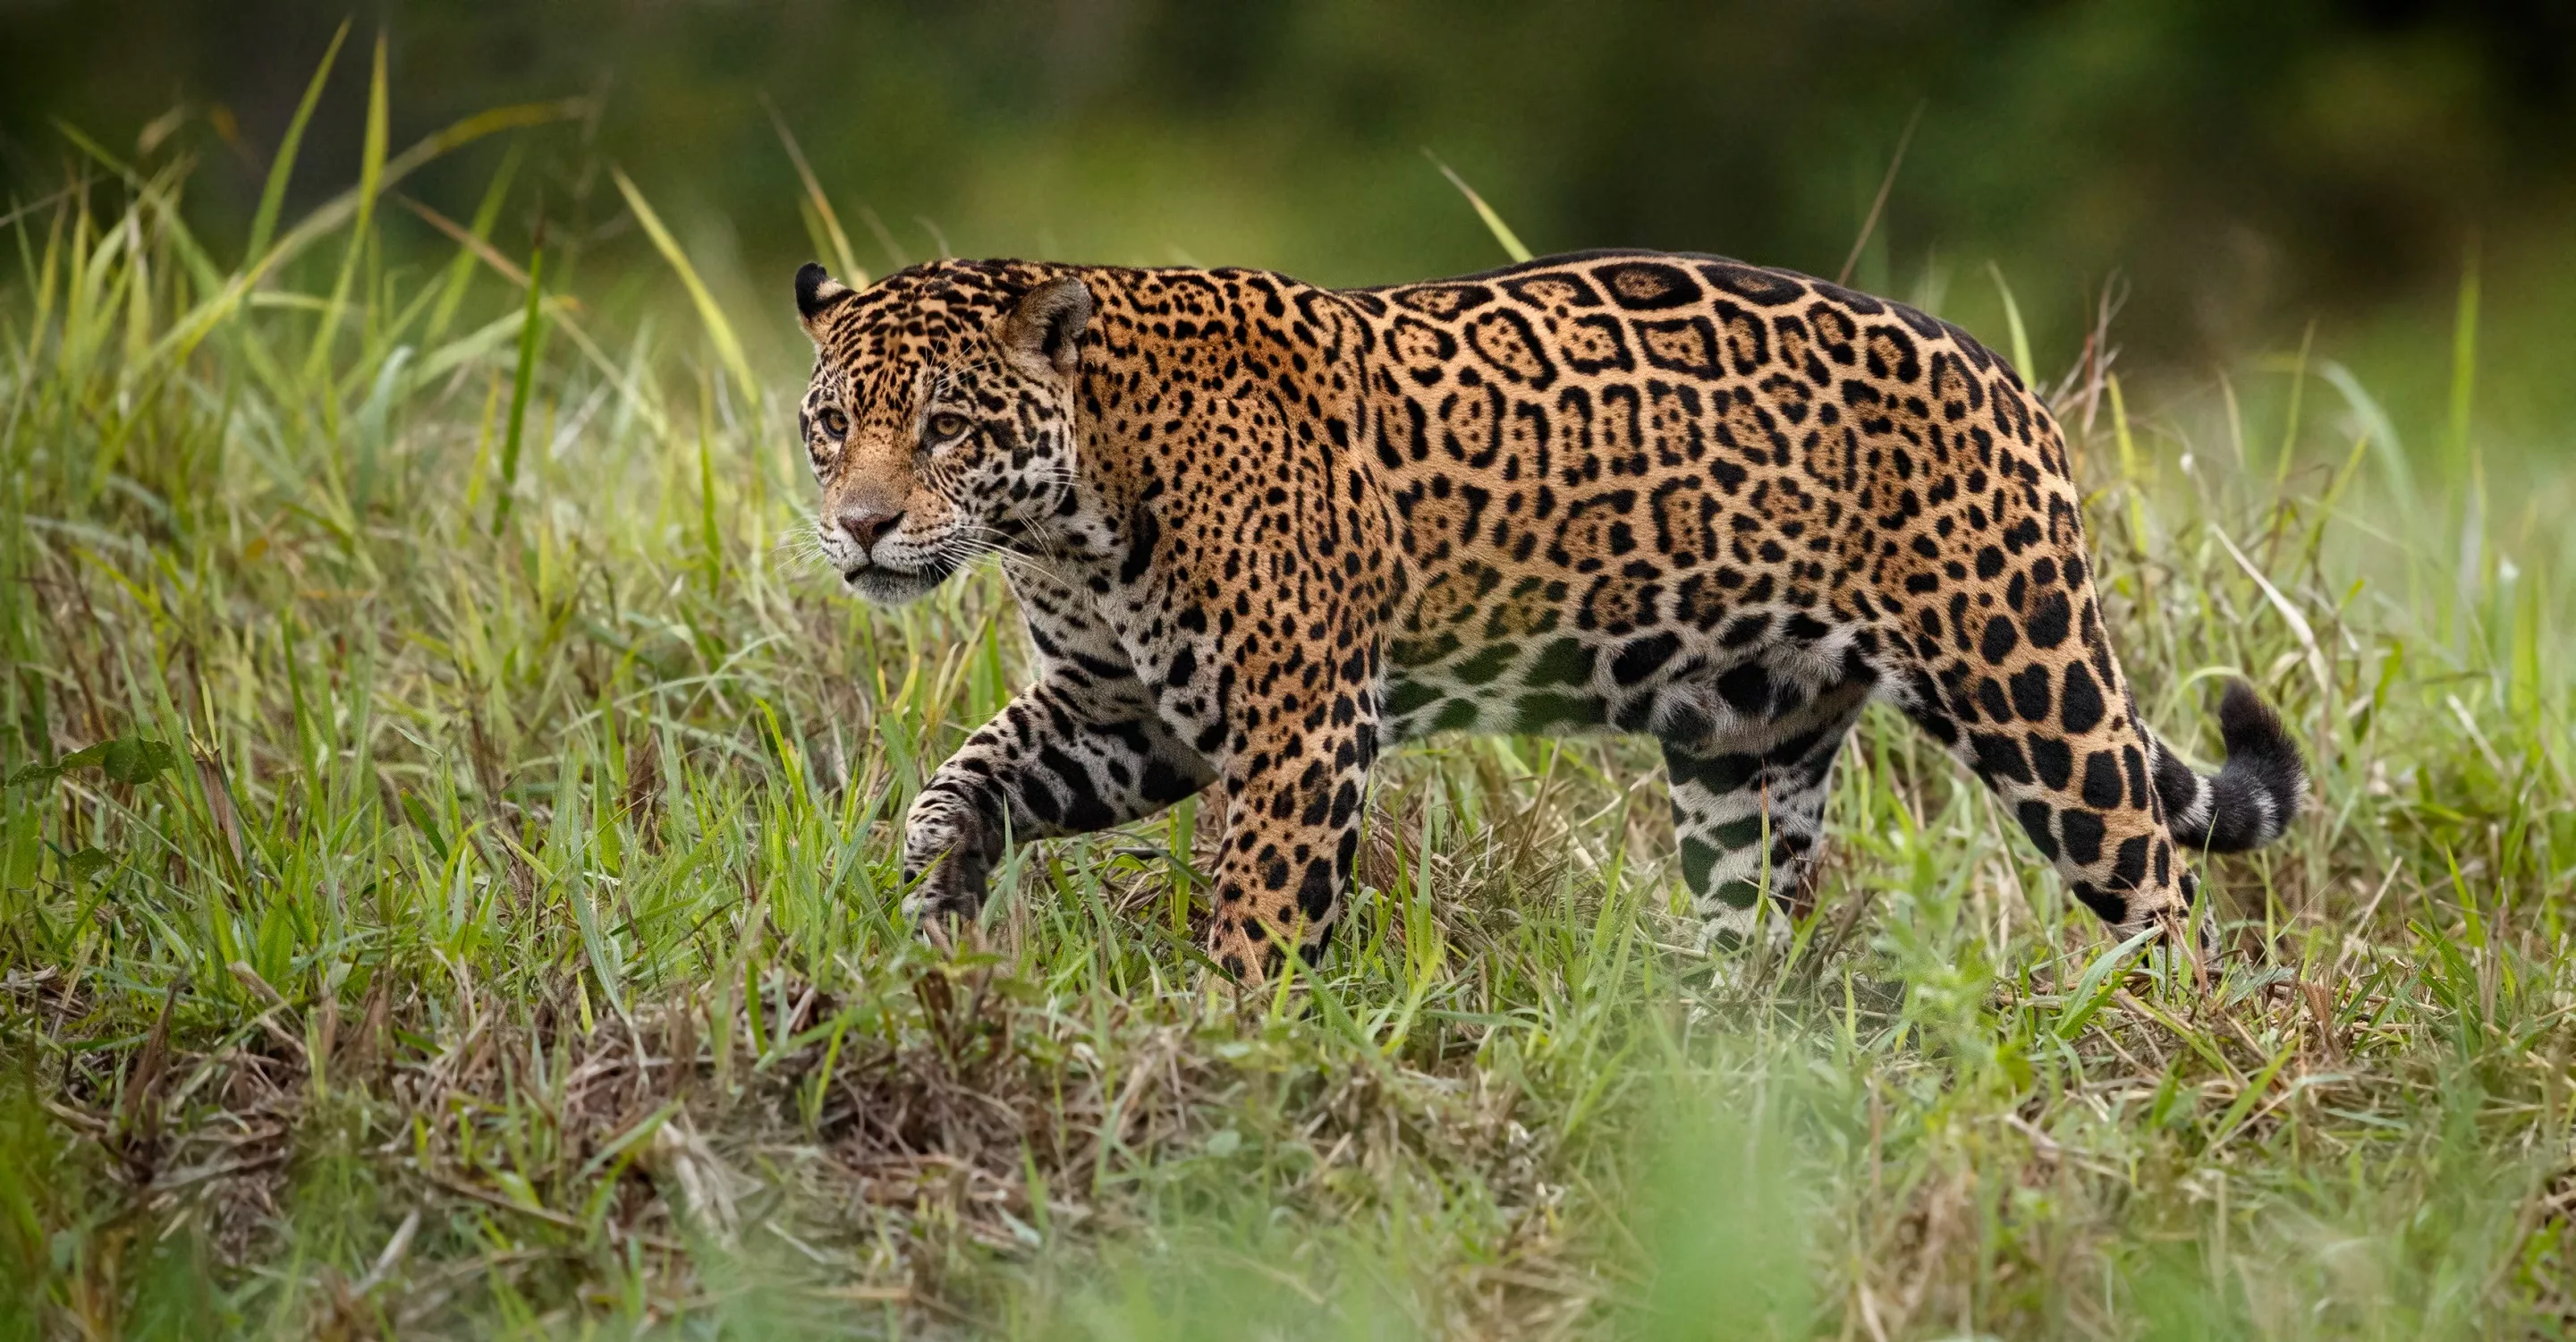 Bela Vista Ecological Refuge in Brazil, South America | Zoos & Sanctuaries,Parks - Rated 3.9